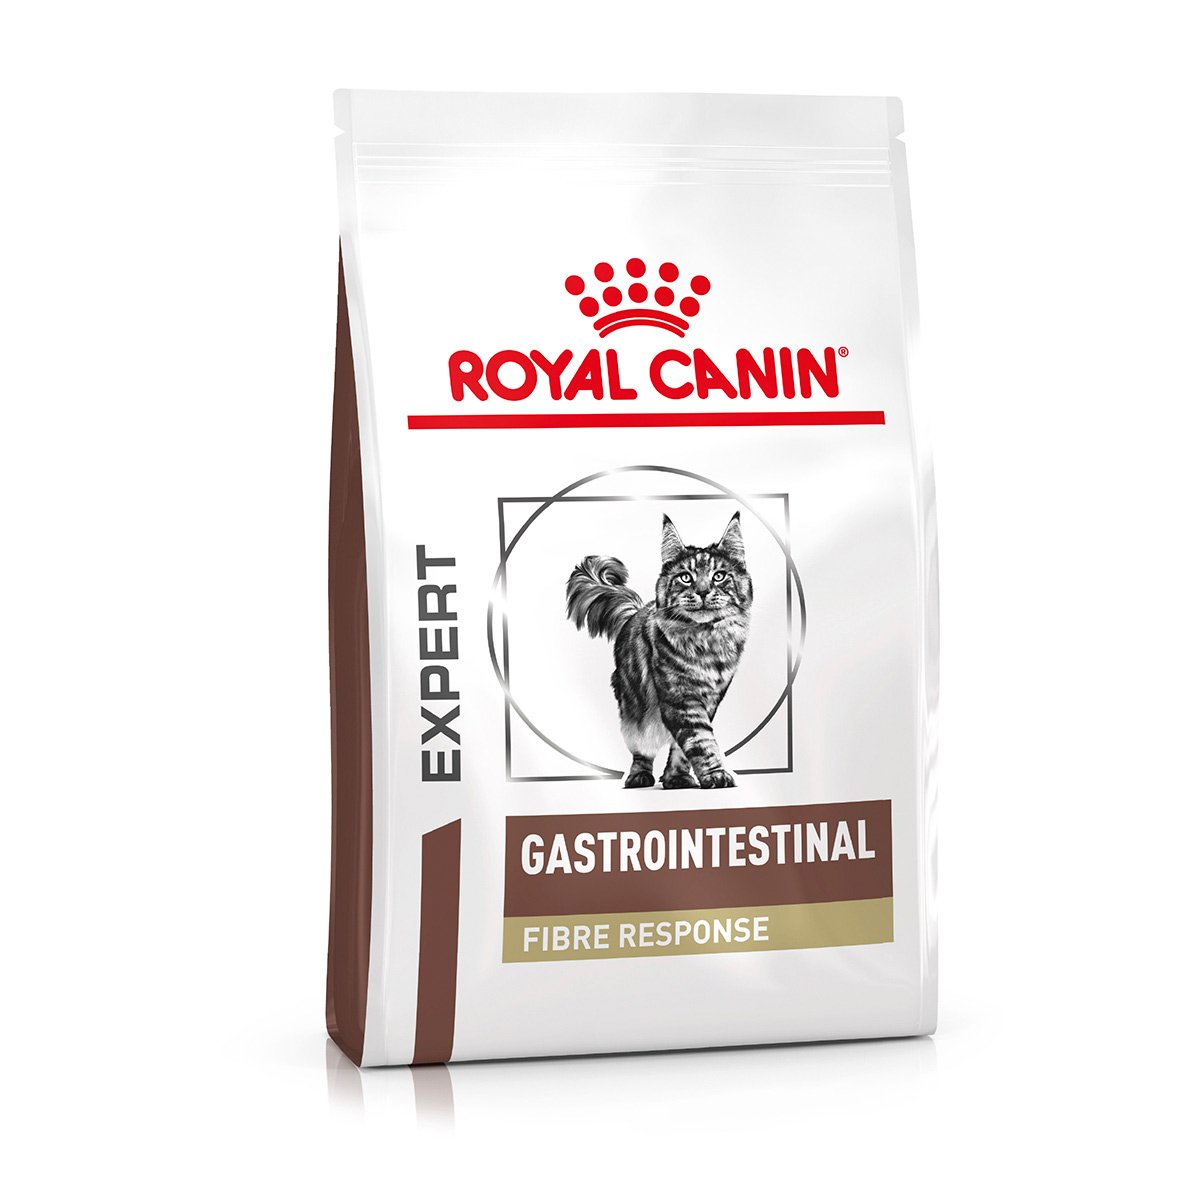 ROYAL CANIN® Veterinary GASTROINTESTINAL FIBRE RESPONSE Trockenfutter für Katzen 4kg von Royal Canin